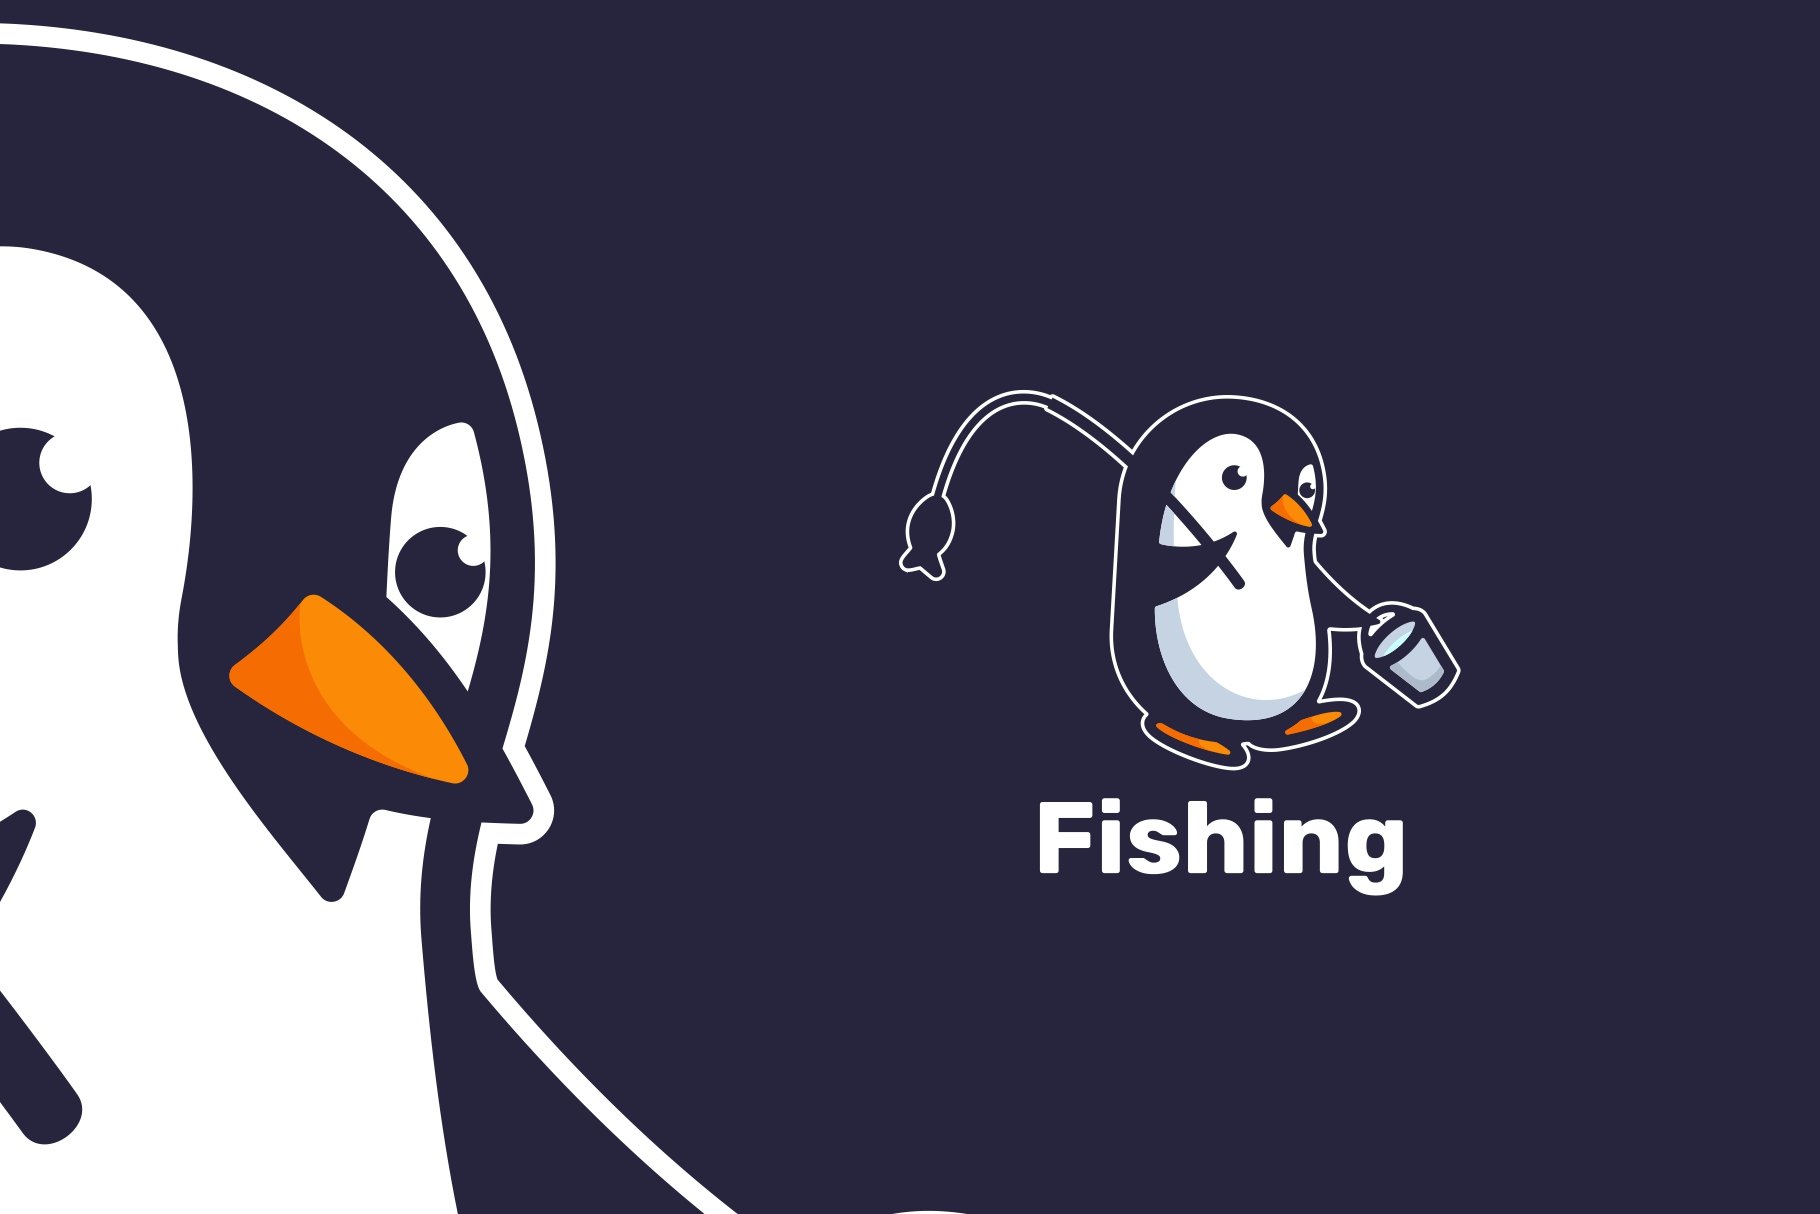 Penguin Cartoon Character Logo cover image.